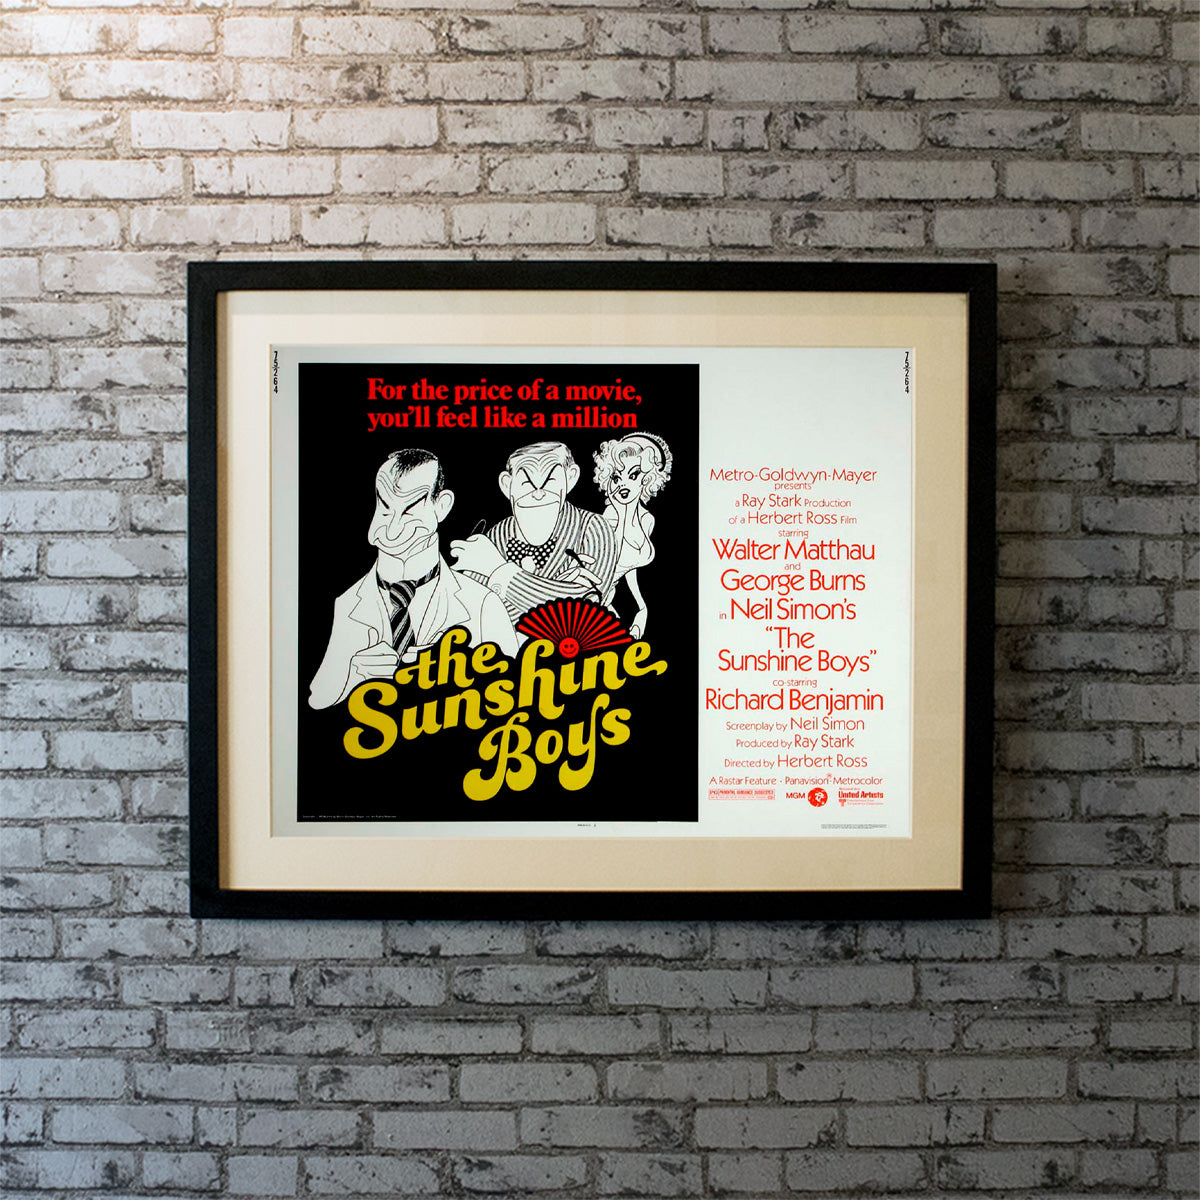 Sunshine Boys, The (1975)